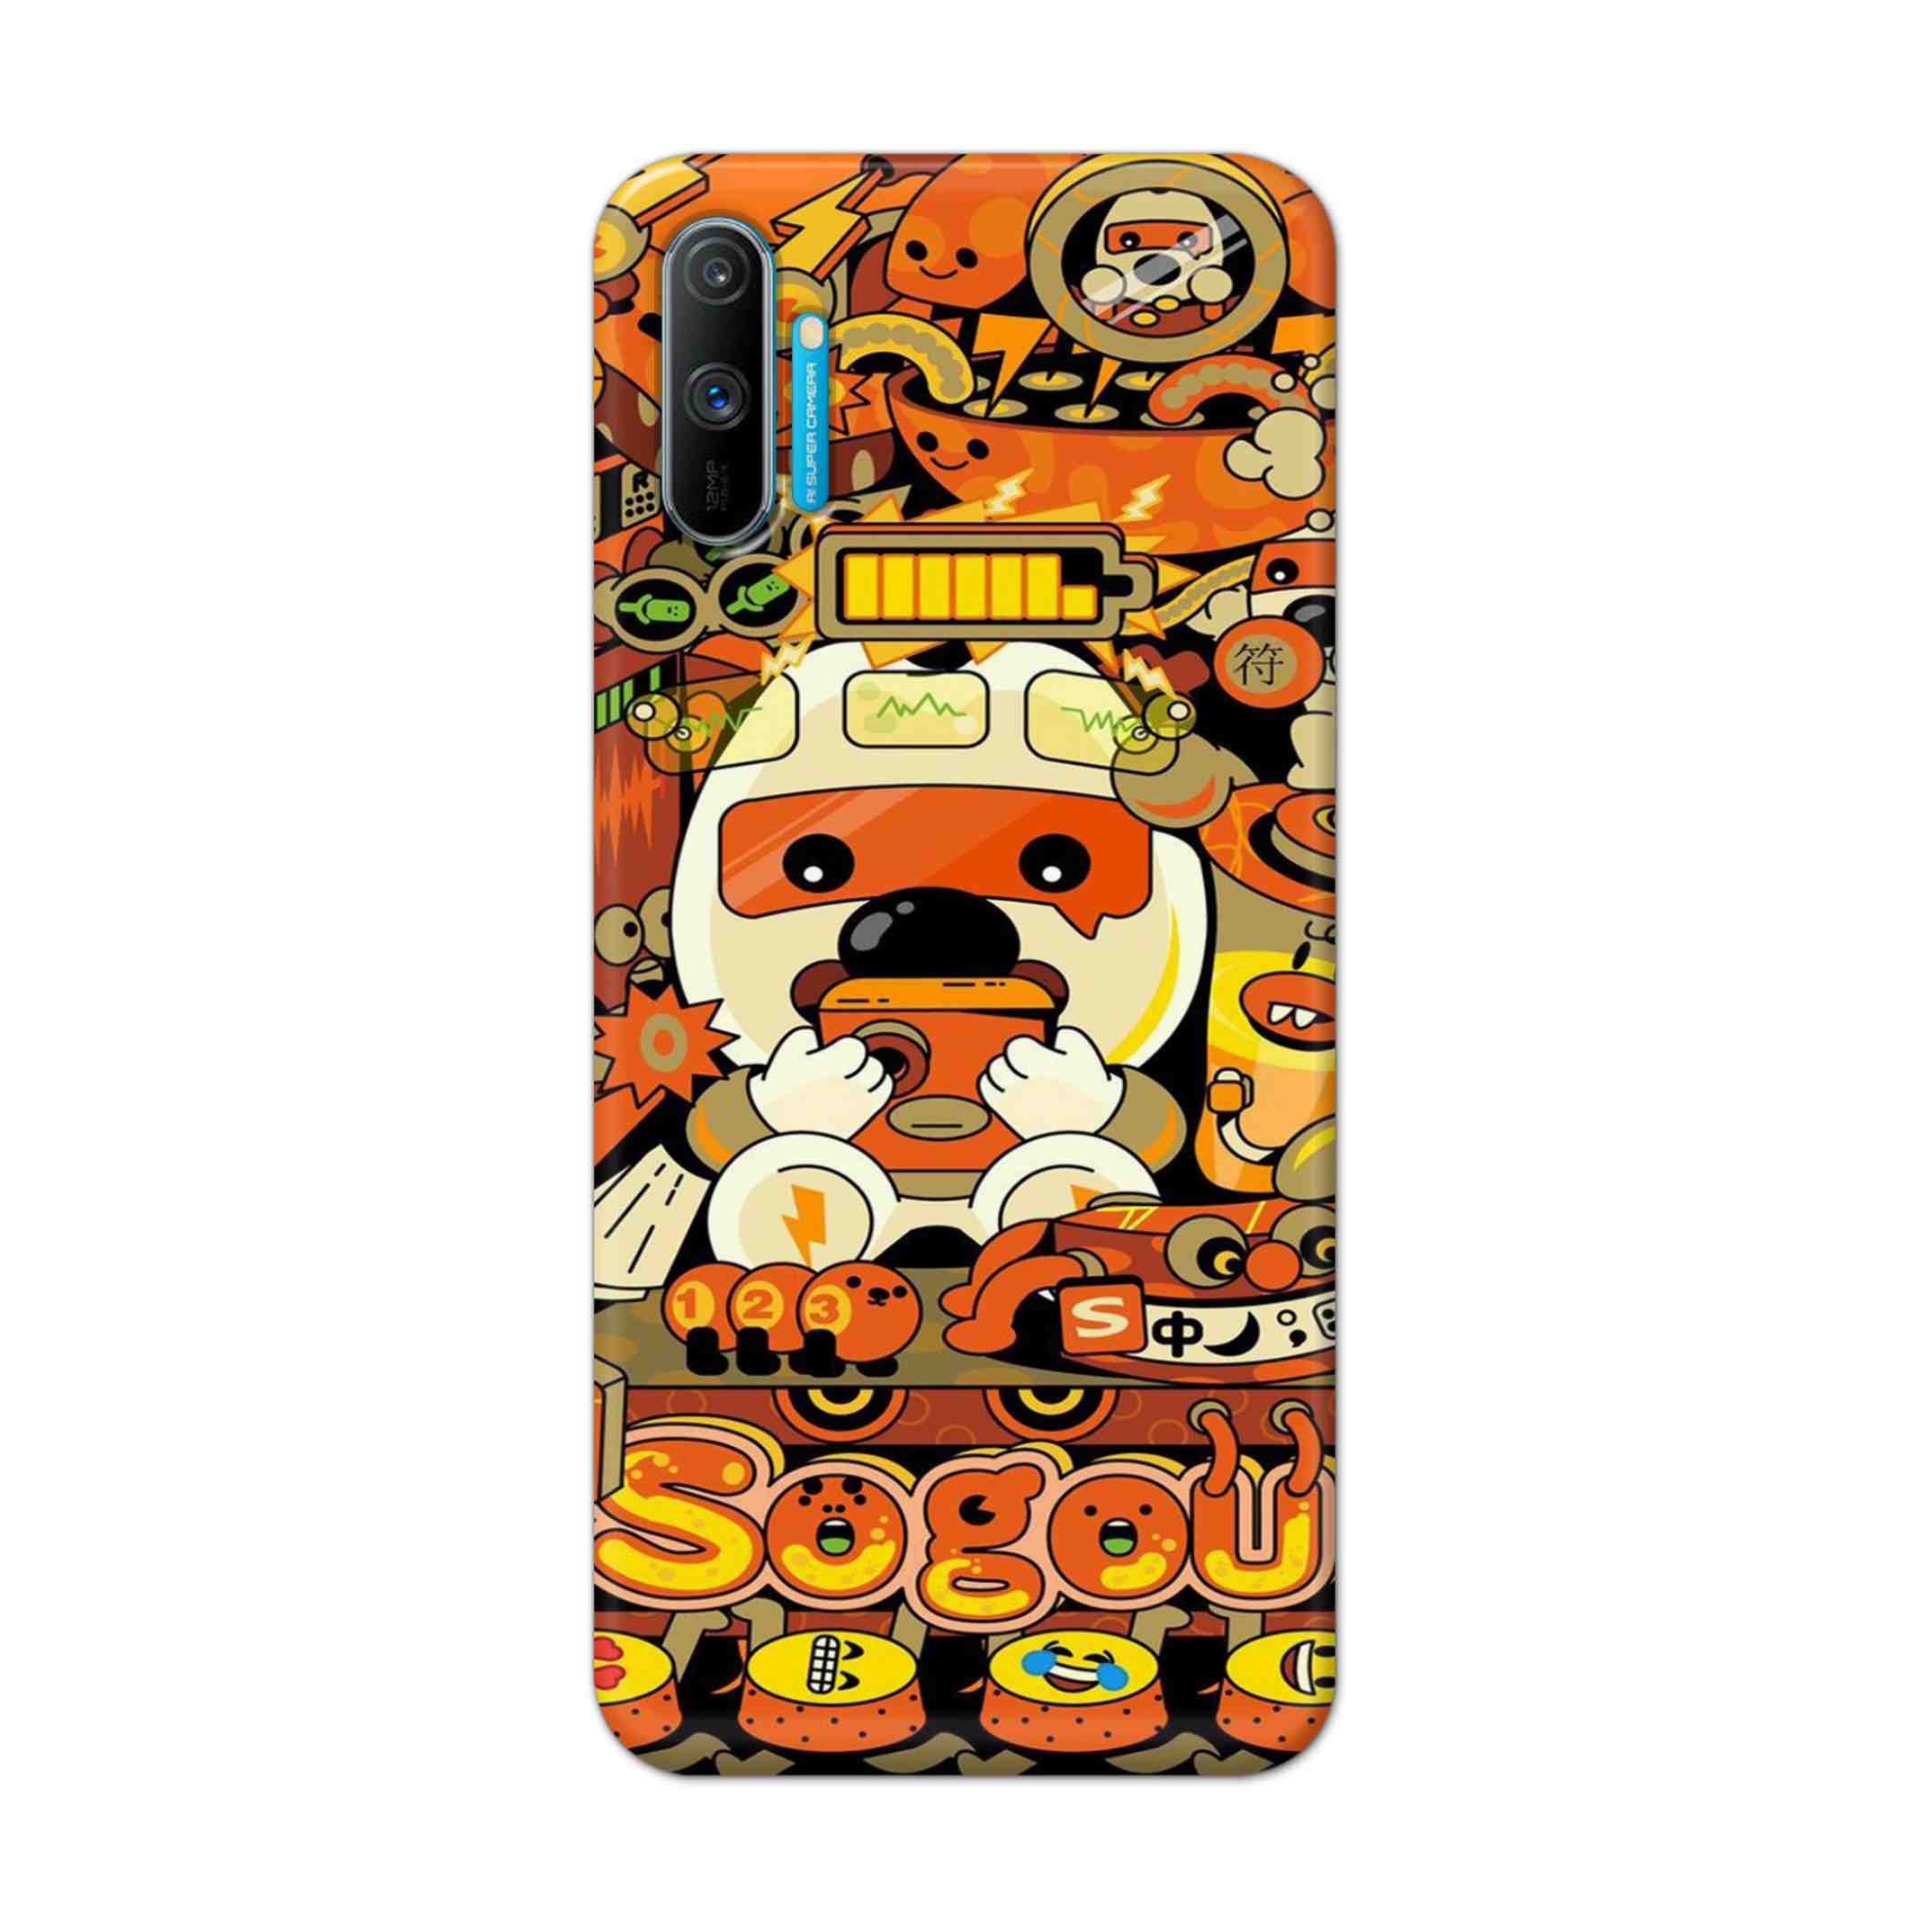 Buy Sogou Hard Back Mobile Phone Case Cover For Realme C3 Online